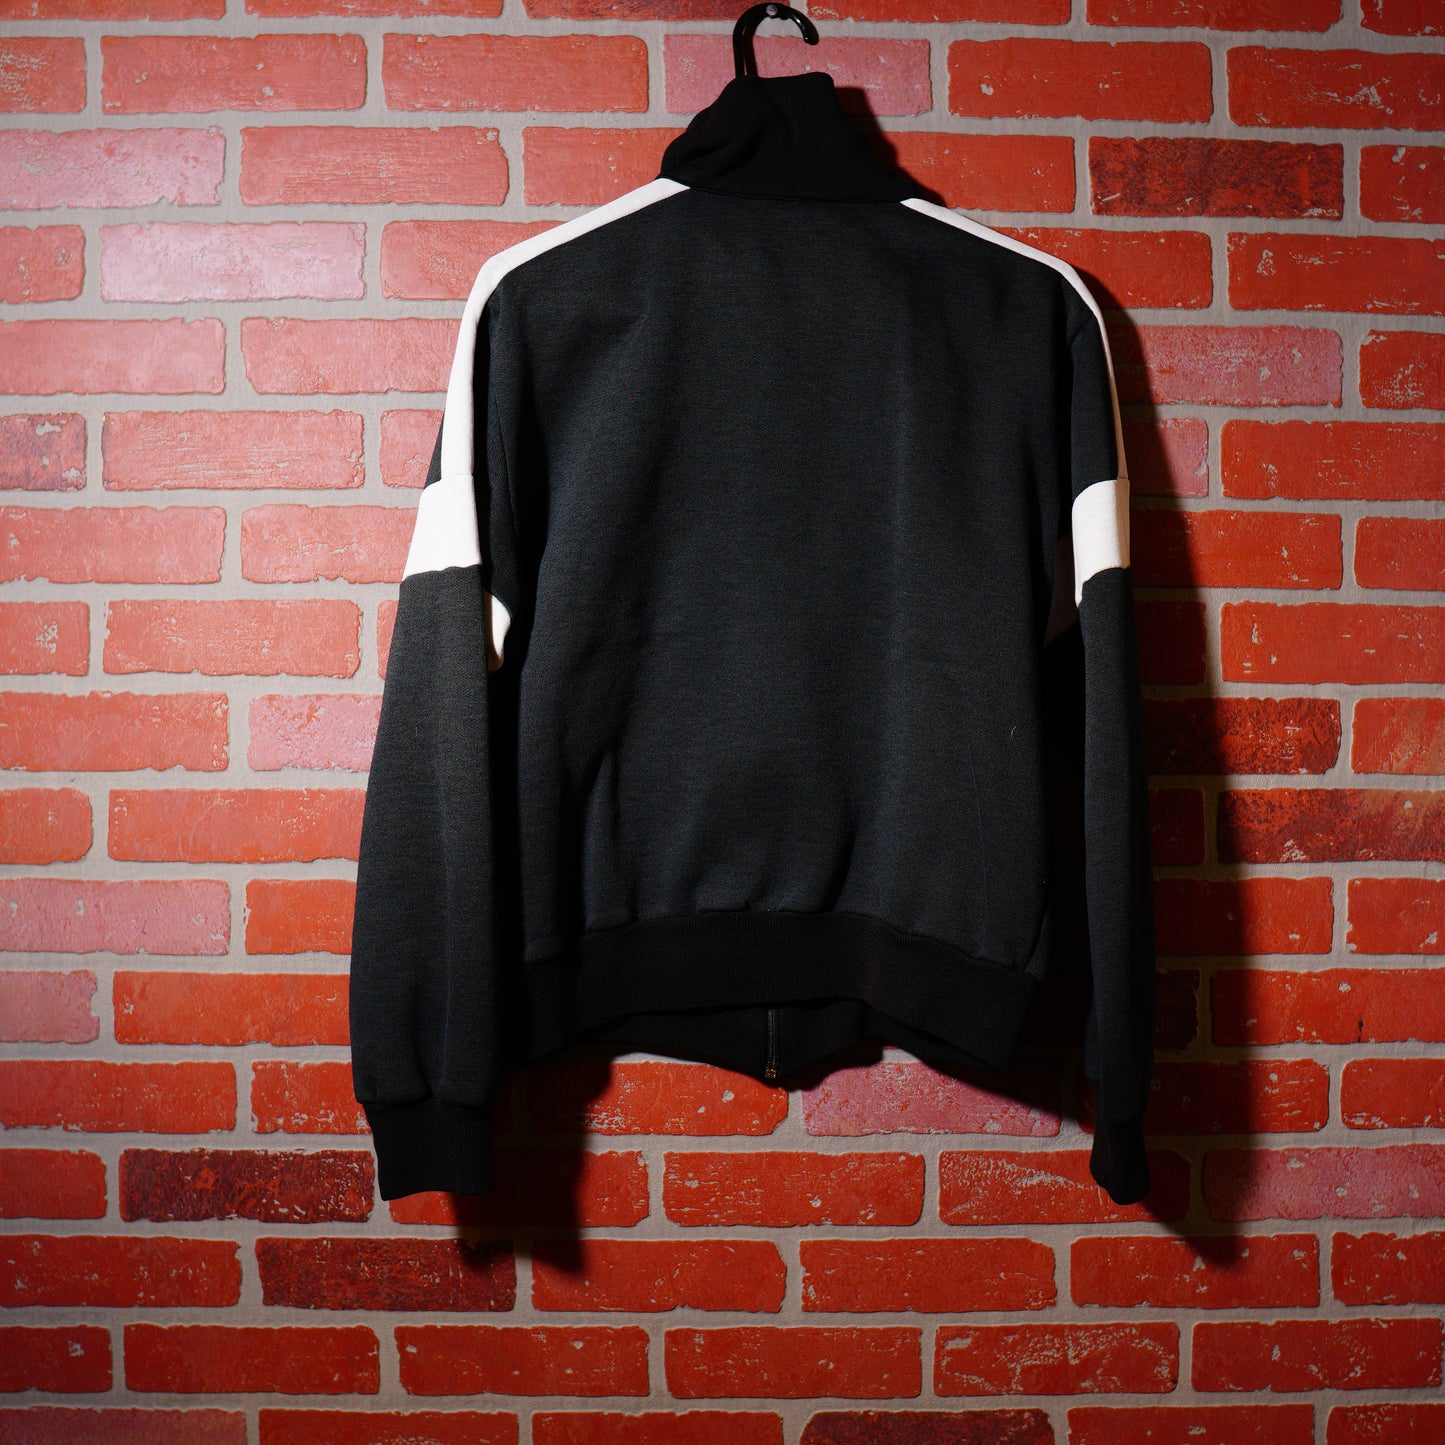 VTG Stained Nike Black Zip-Up Jacket